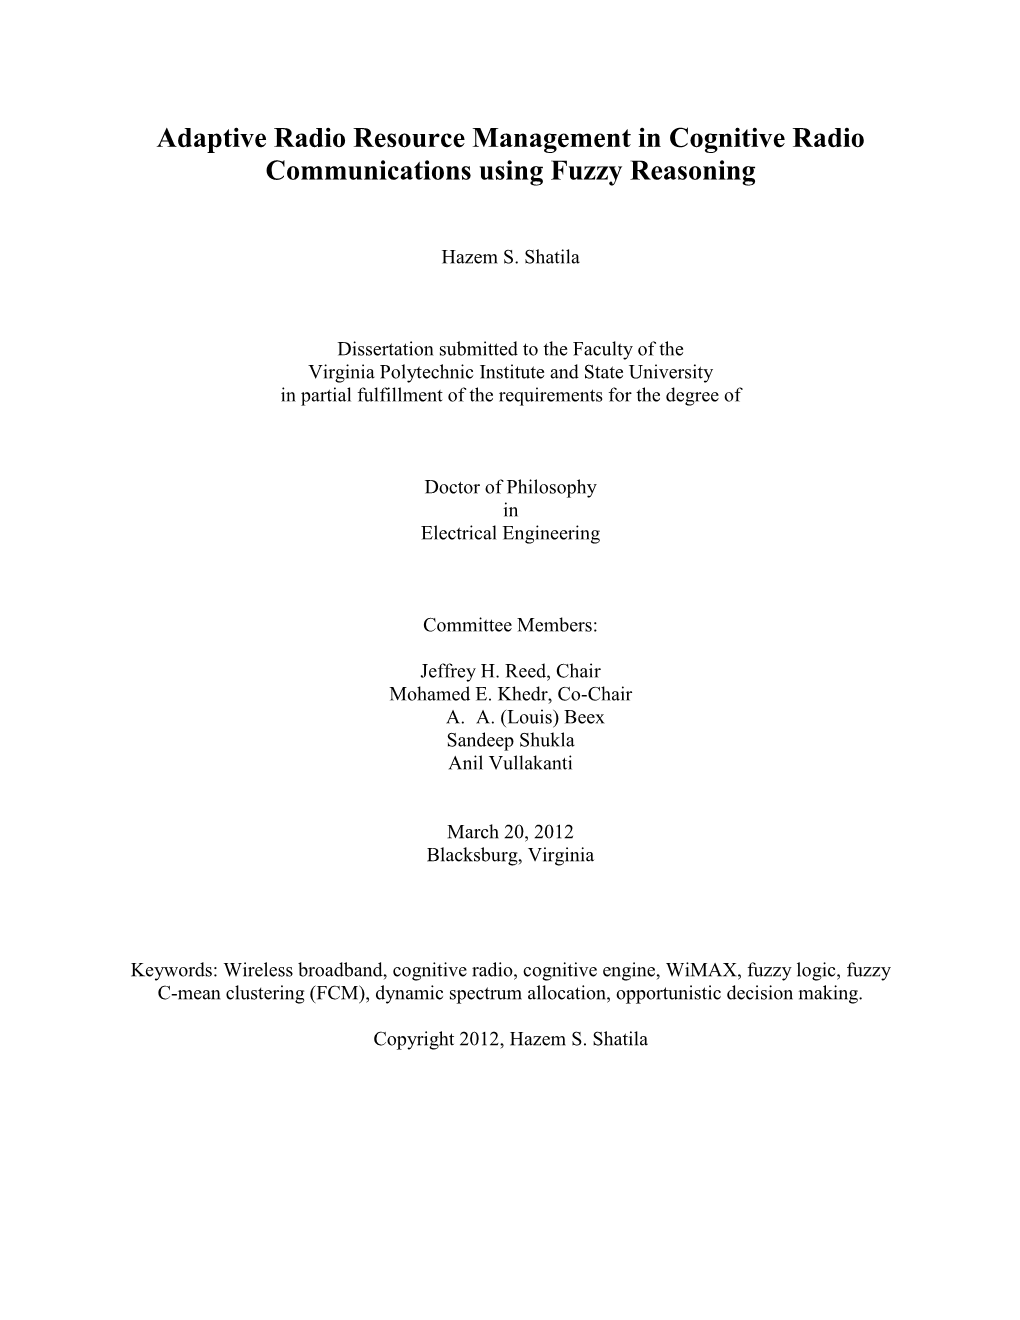 Adaptive Radio Resource Management in Cognitive Radio Communications Using Fuzzy Reasoning